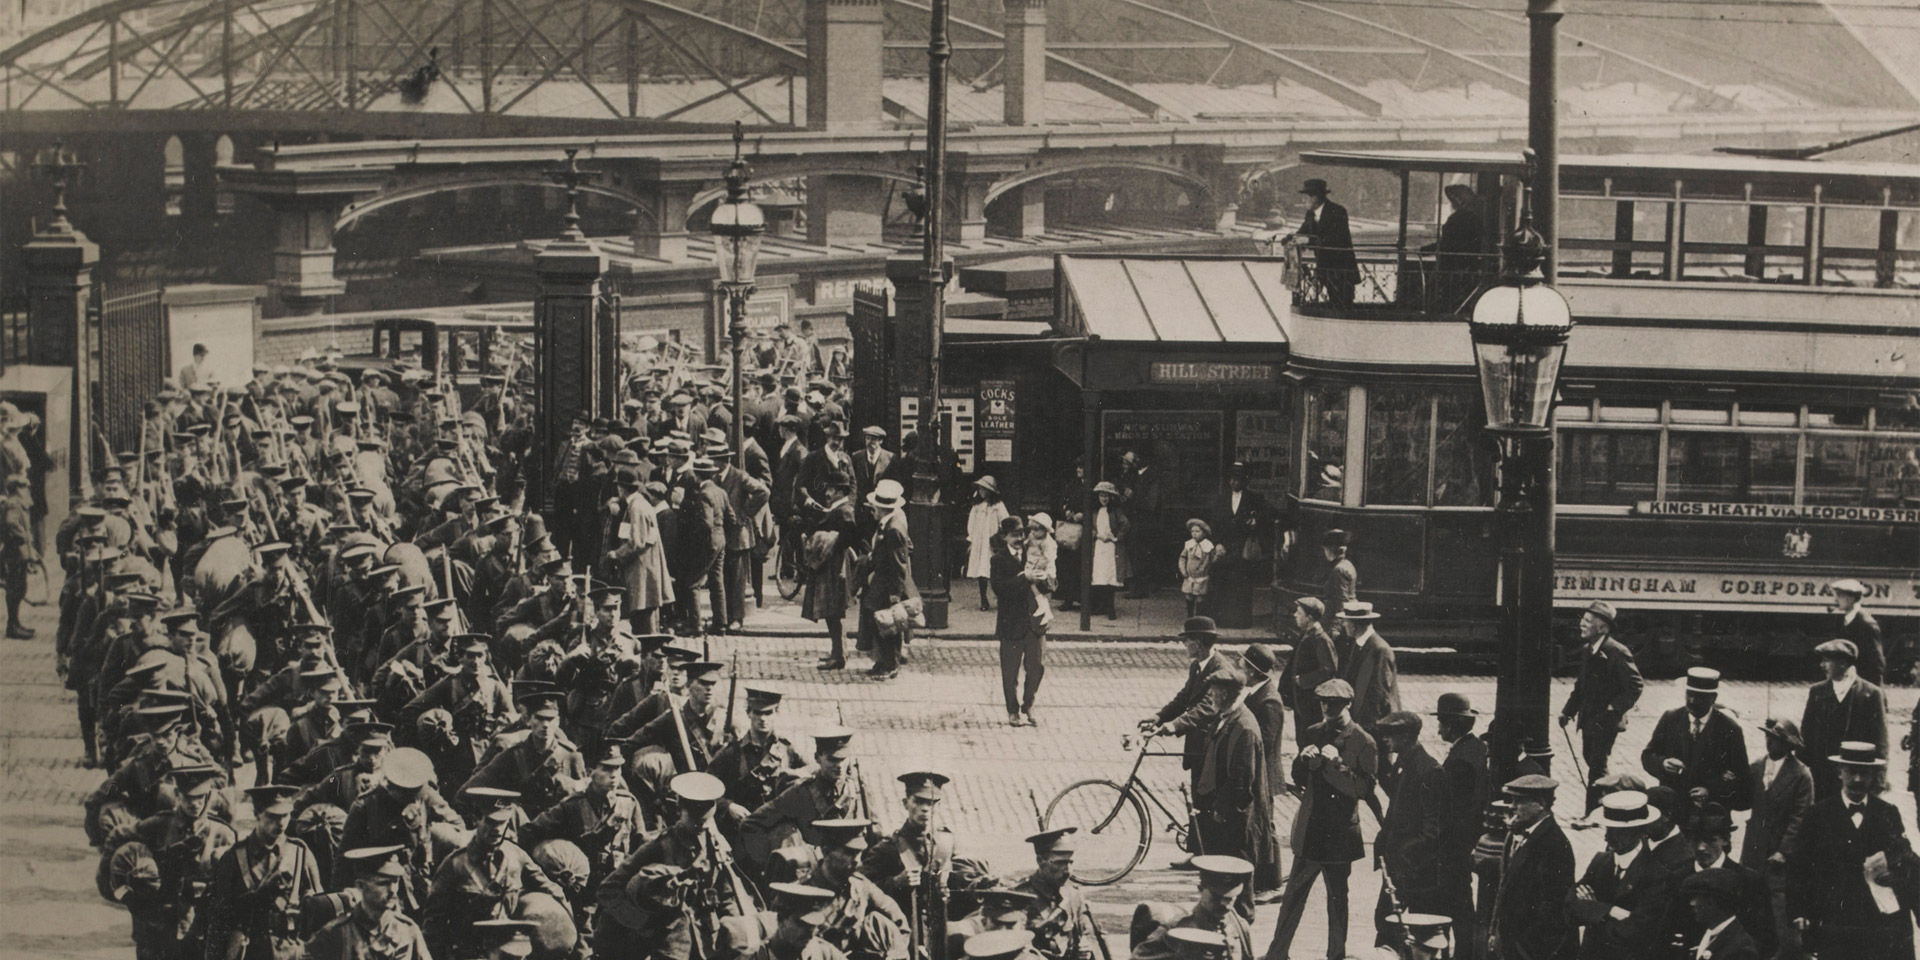 Soldiers marching through Birmingham train station, 1914